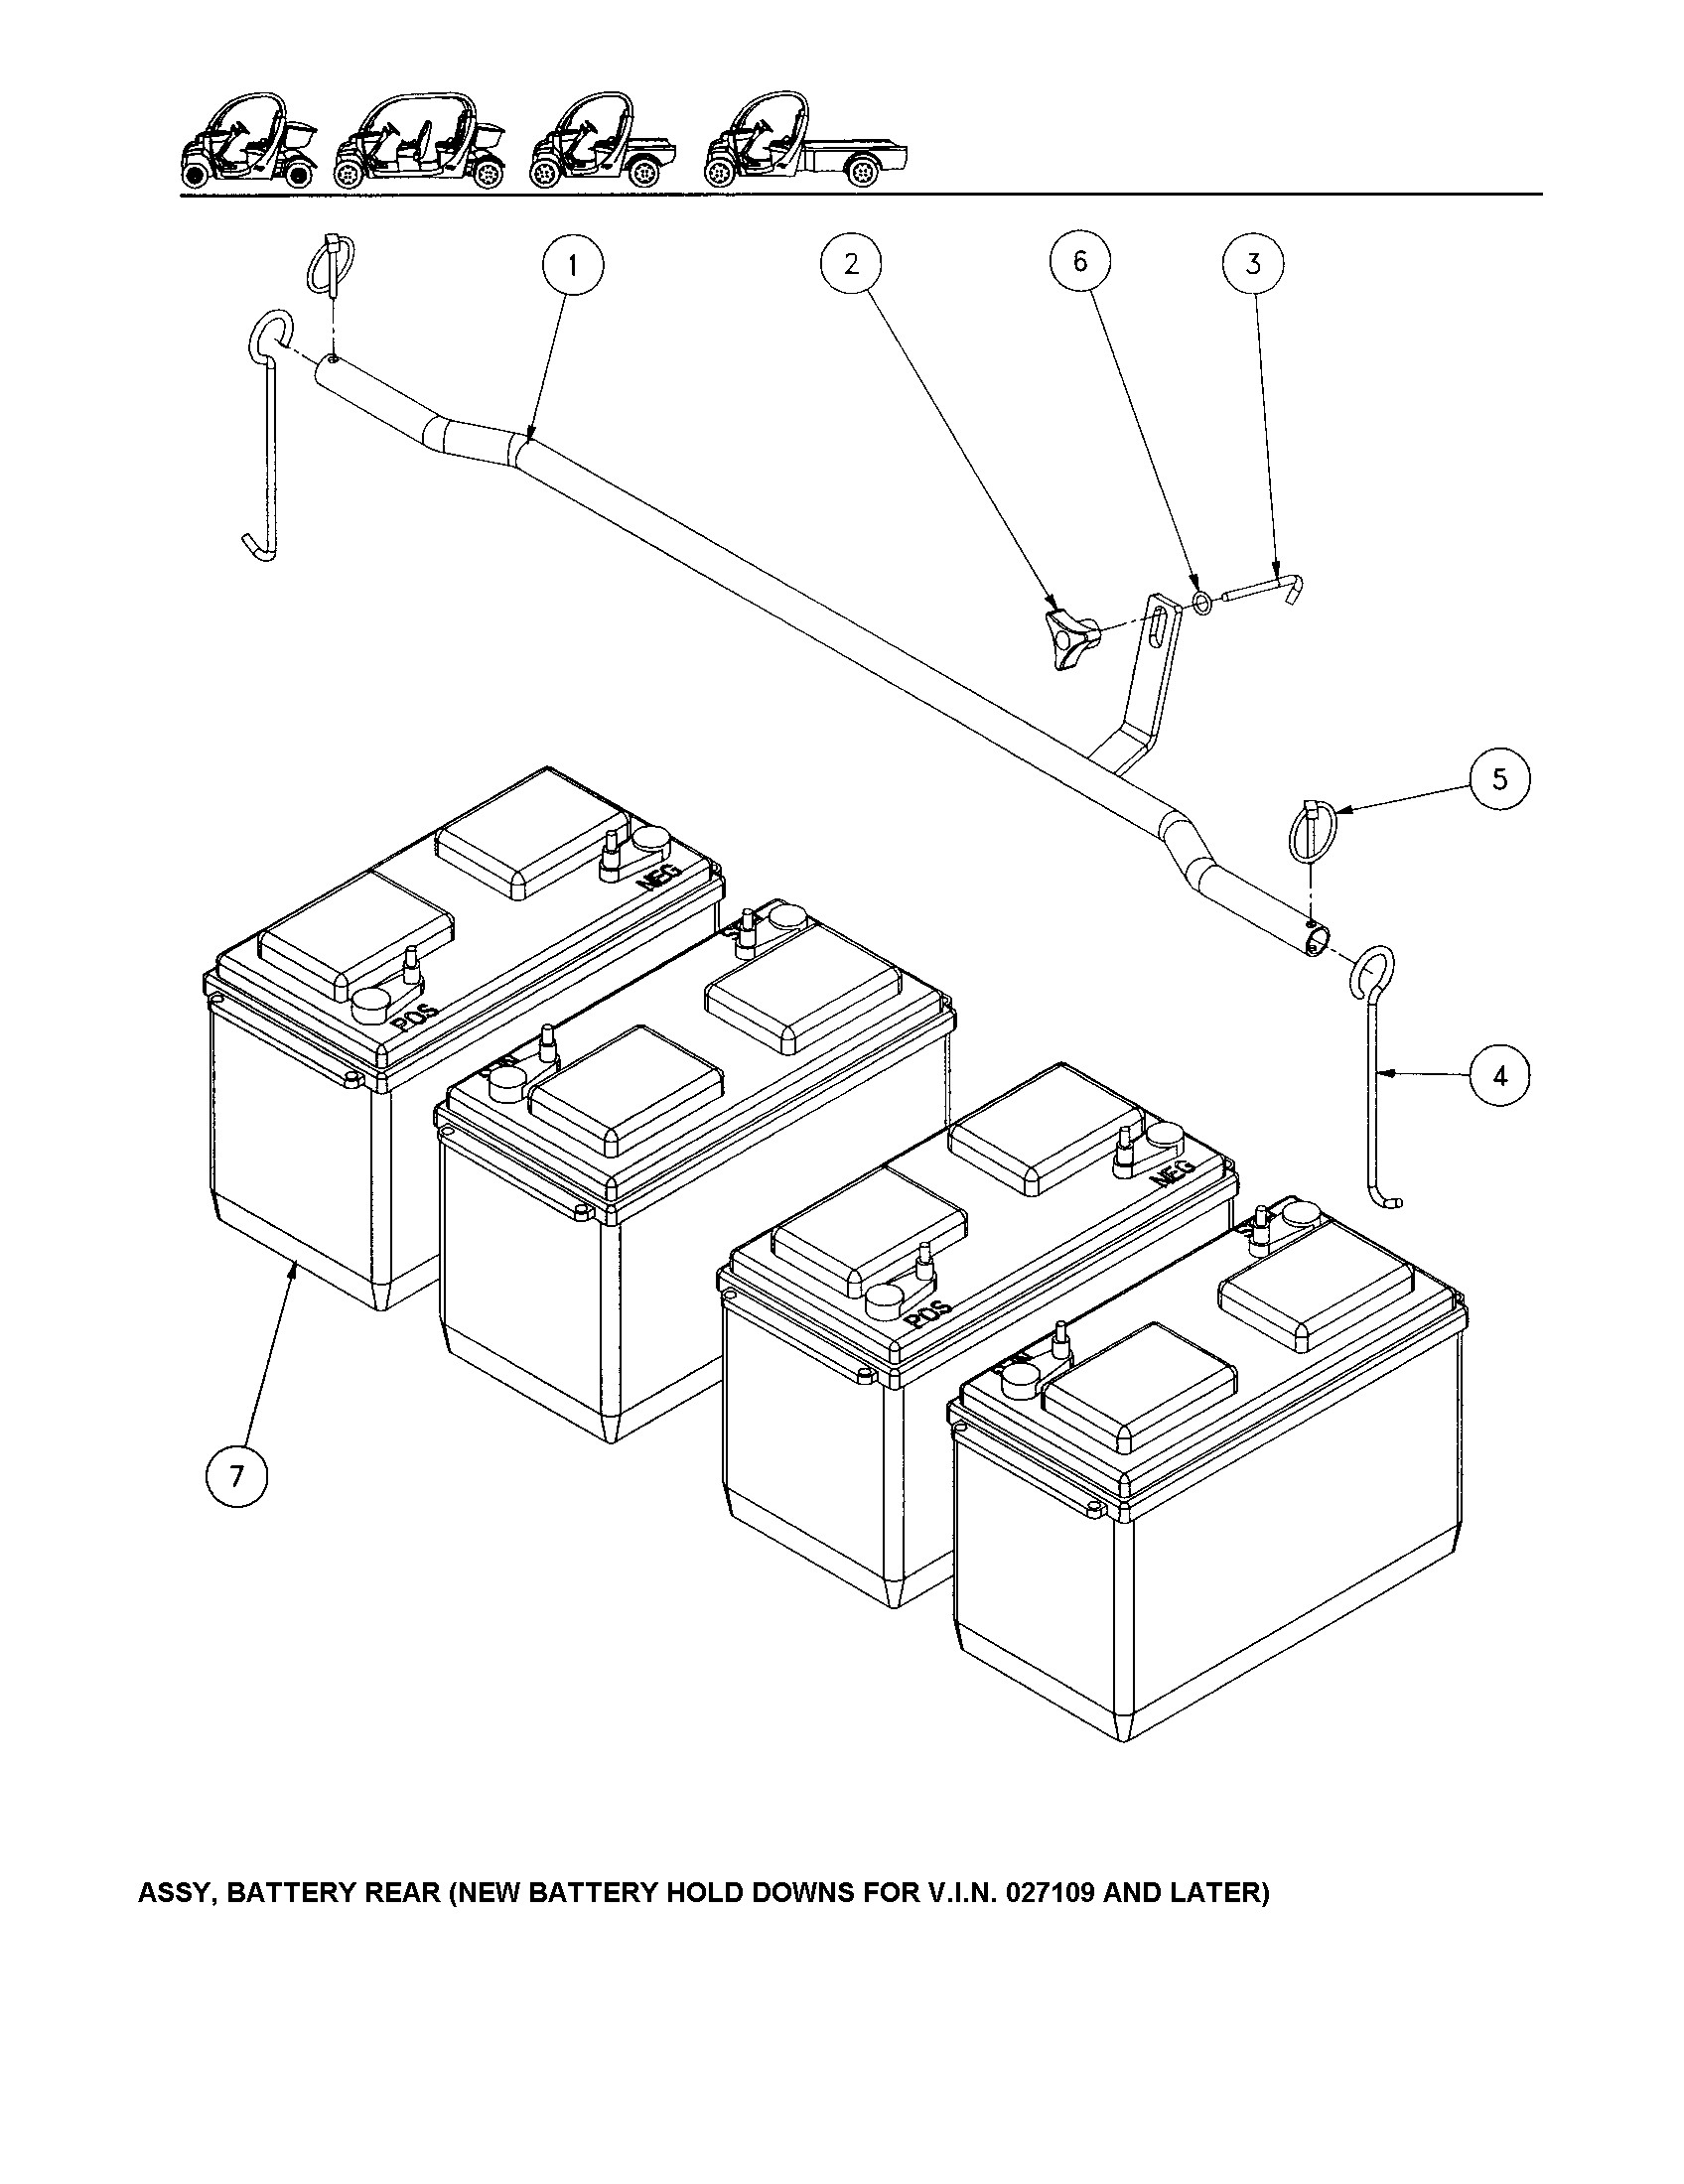 Car Battery Wiring Diagram Lovely Car Battery Wiring Diagram Decor Home with Wiring Of Car Battery Wiring Diagram